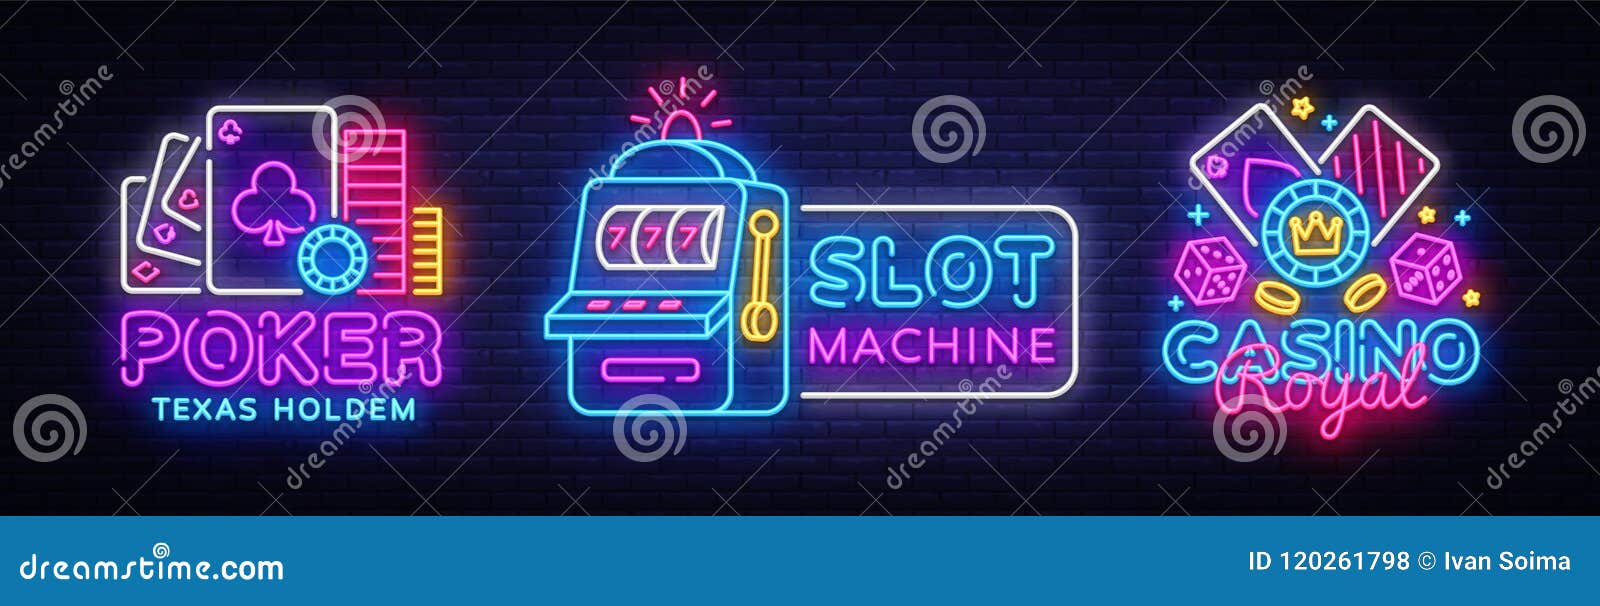 Casino Neon Sign Collection Design Vector Template. Casino, Poker Night Logo,  Slot Machine, Bright Neon Signboard Stock Vector - Illustration of  background, leisure: 120261798